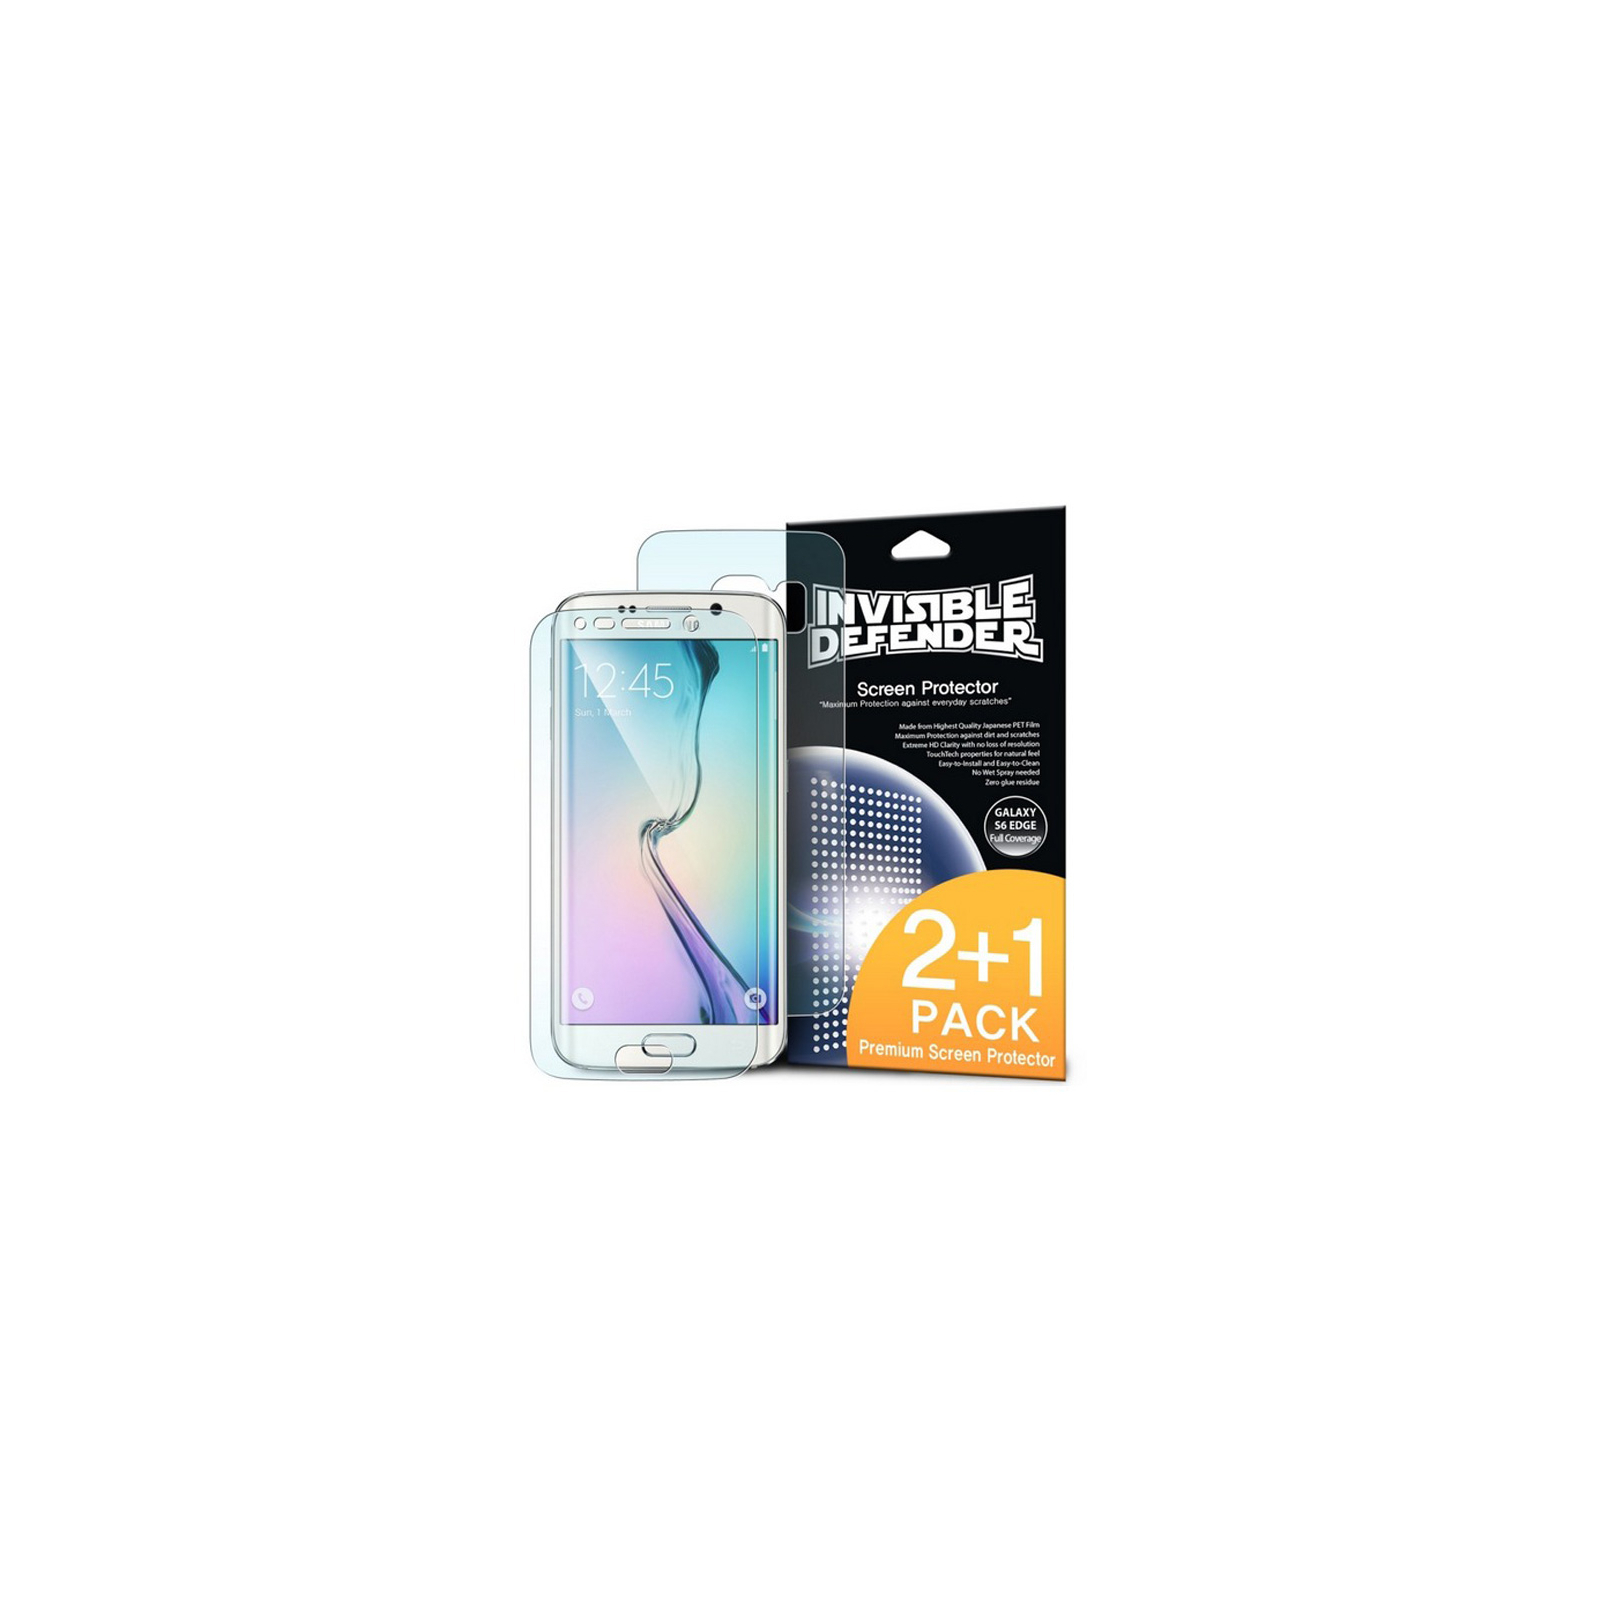 Пленка защитная Ringke для телефона Samsung Galaxy S6 Edge (Full Cover) (558346)